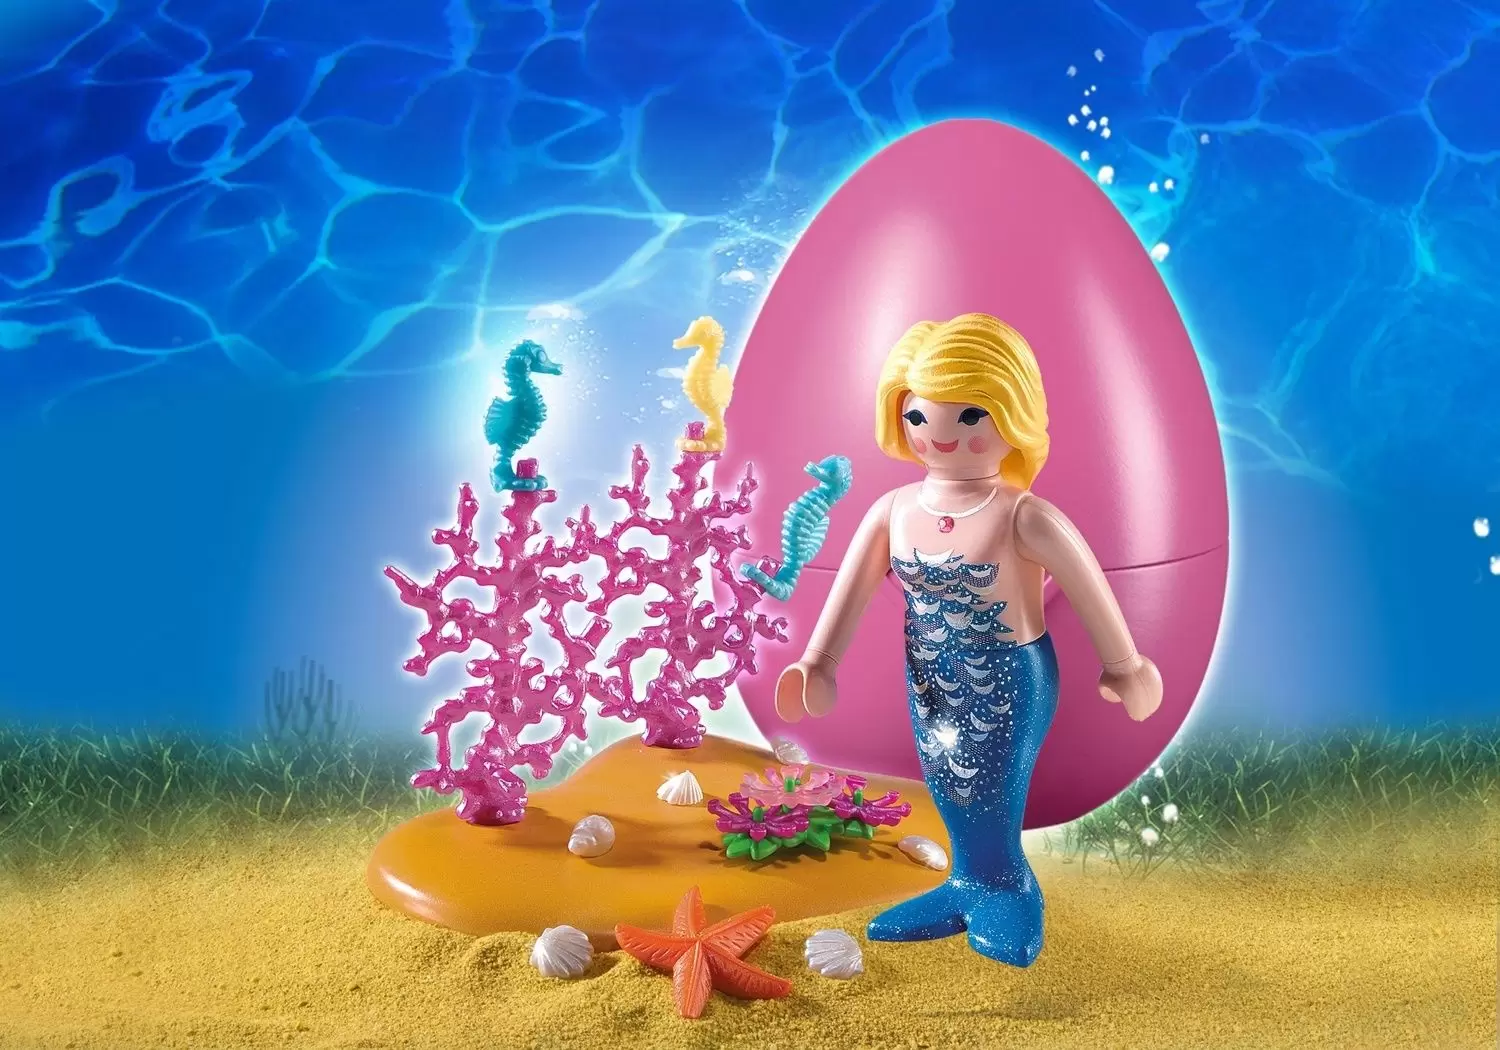 Playmobil underwater world - Mermaid Girl with Seahorses